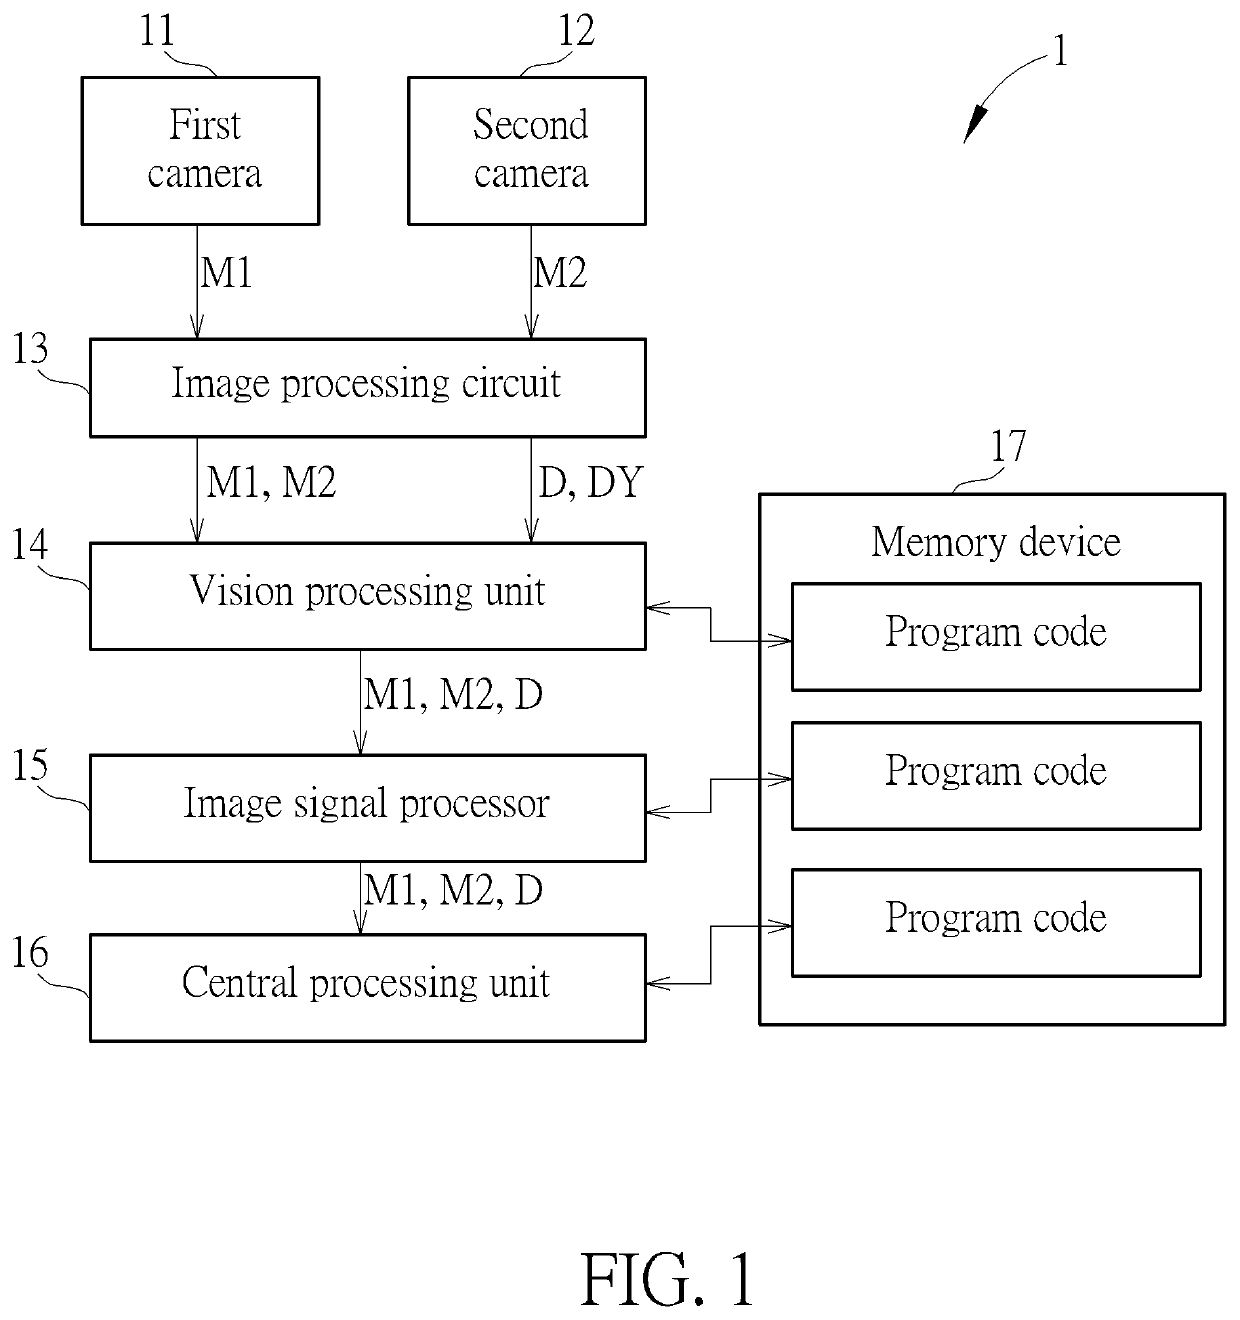 Method, Apparatus, Medium for Interactive Image Processing Using Depth Engine and Digital Signal Processor